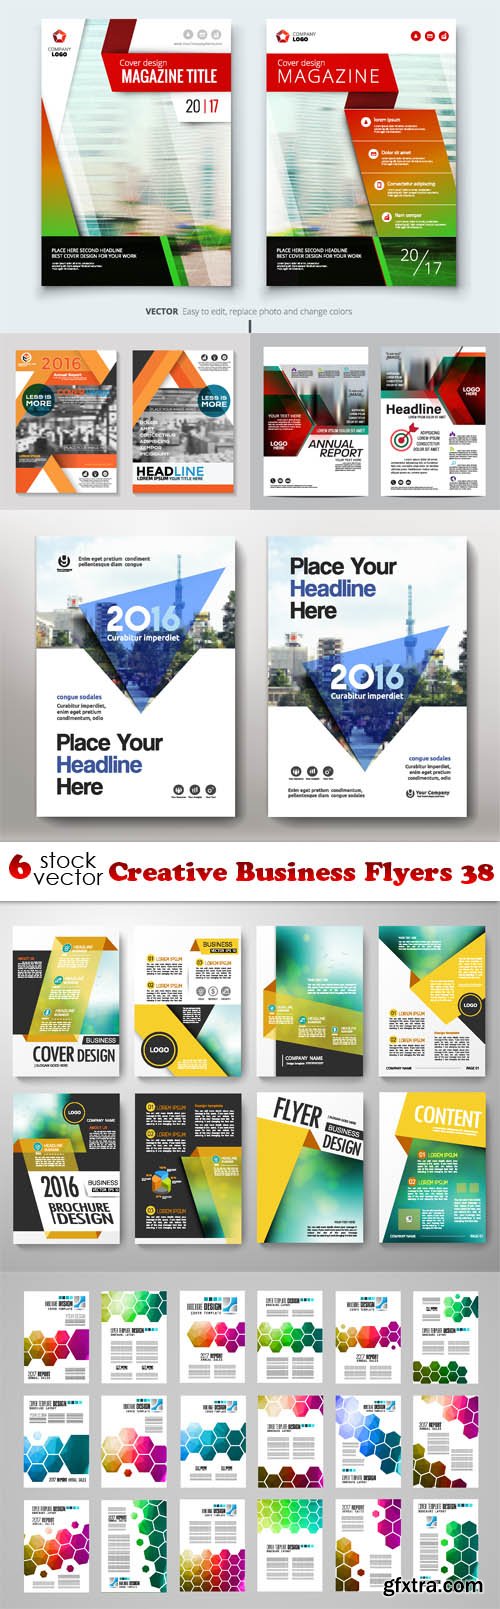 Vectors - Creative Business Flyers 38